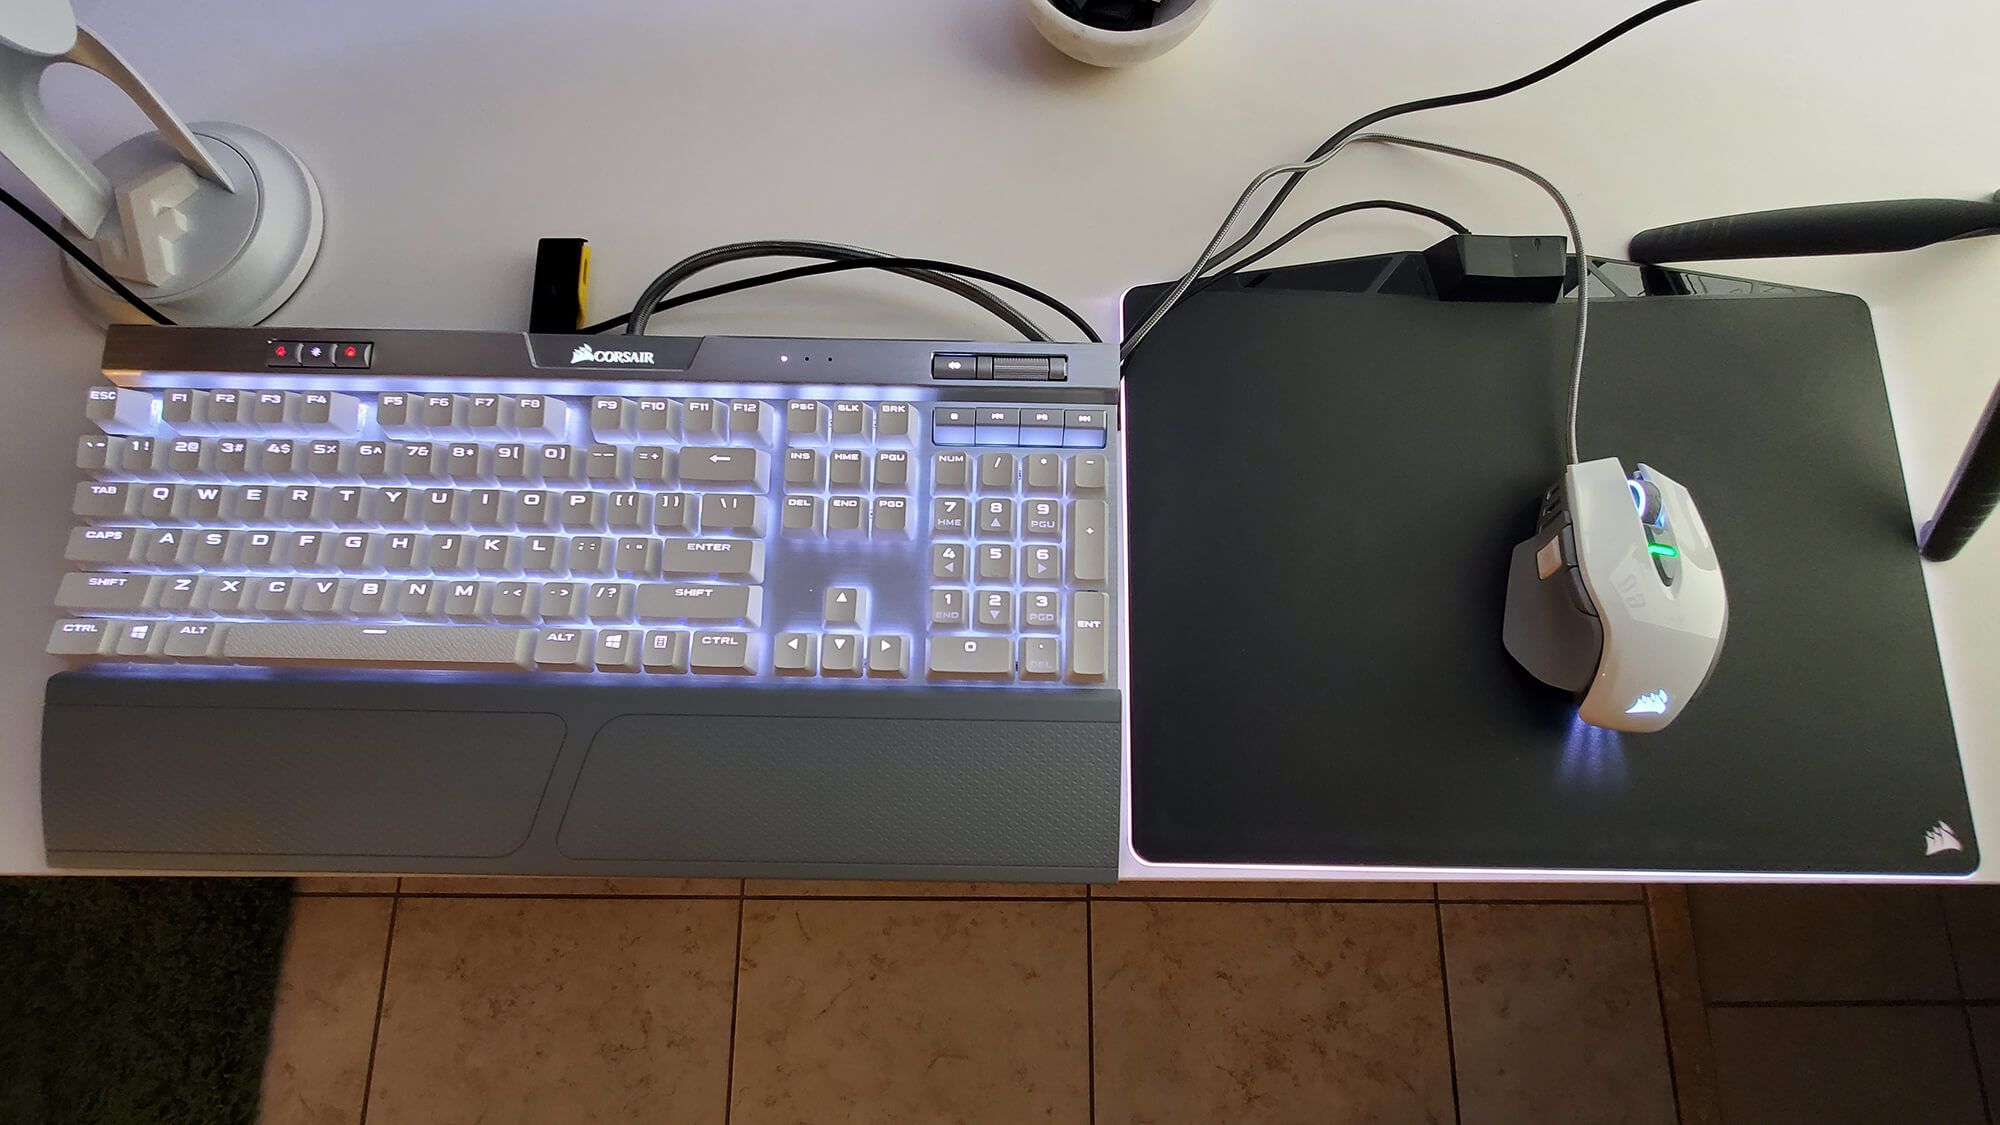 Corsair K70 RGB MK.2 SE keyboard, Corsair M65 RGB Elite mouse, and Corsair MM800C RGB Polaris mouse pad